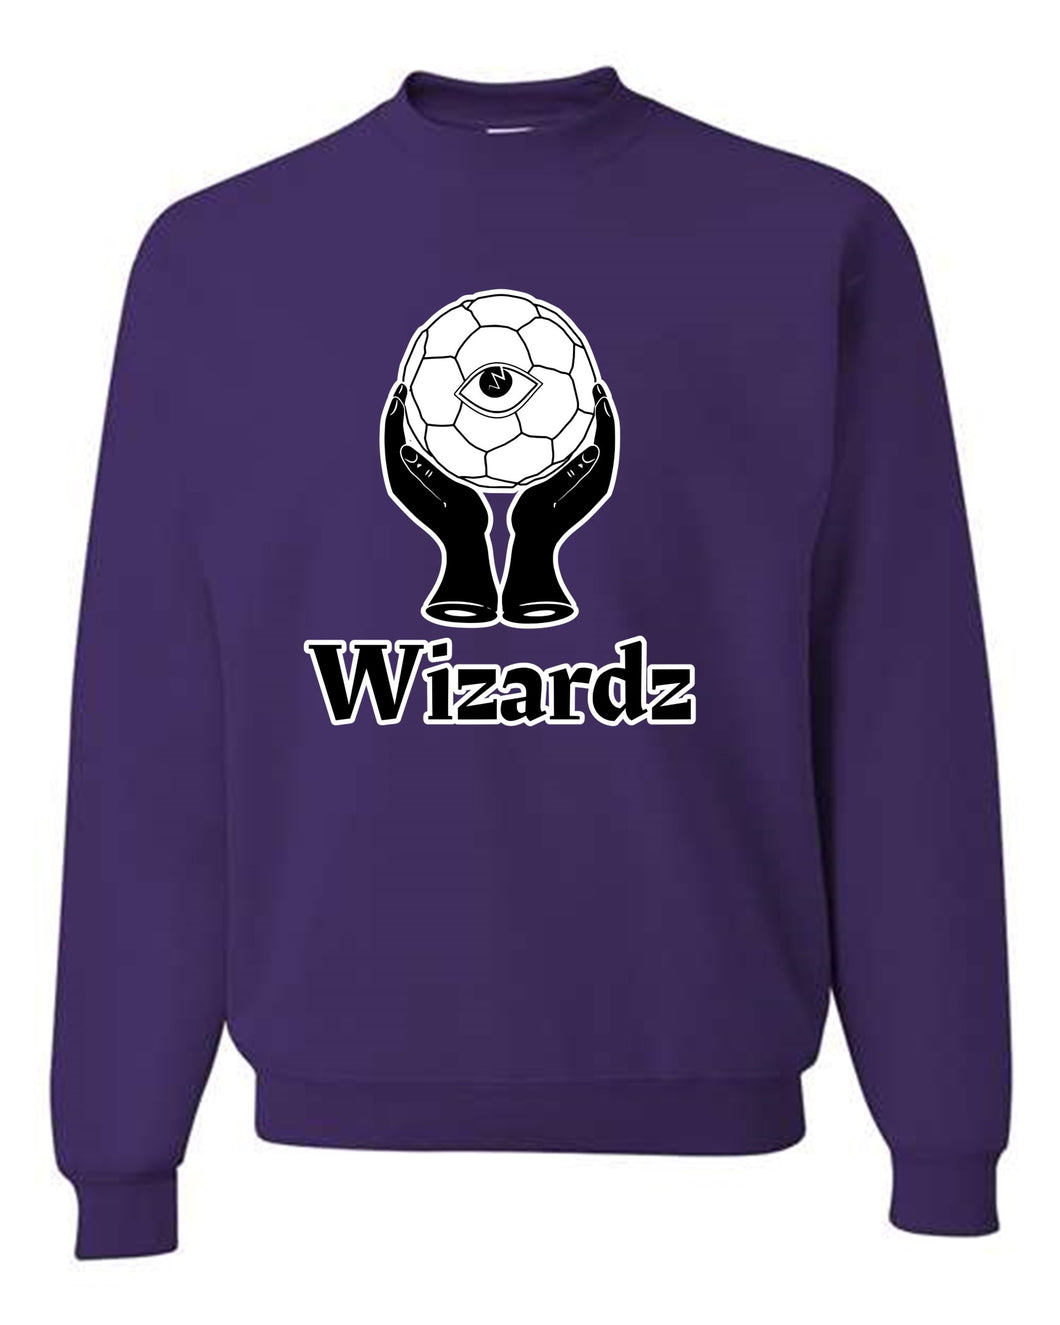 Wizardz Soccer Crewneck Sweatshirt (Youth and Adult)